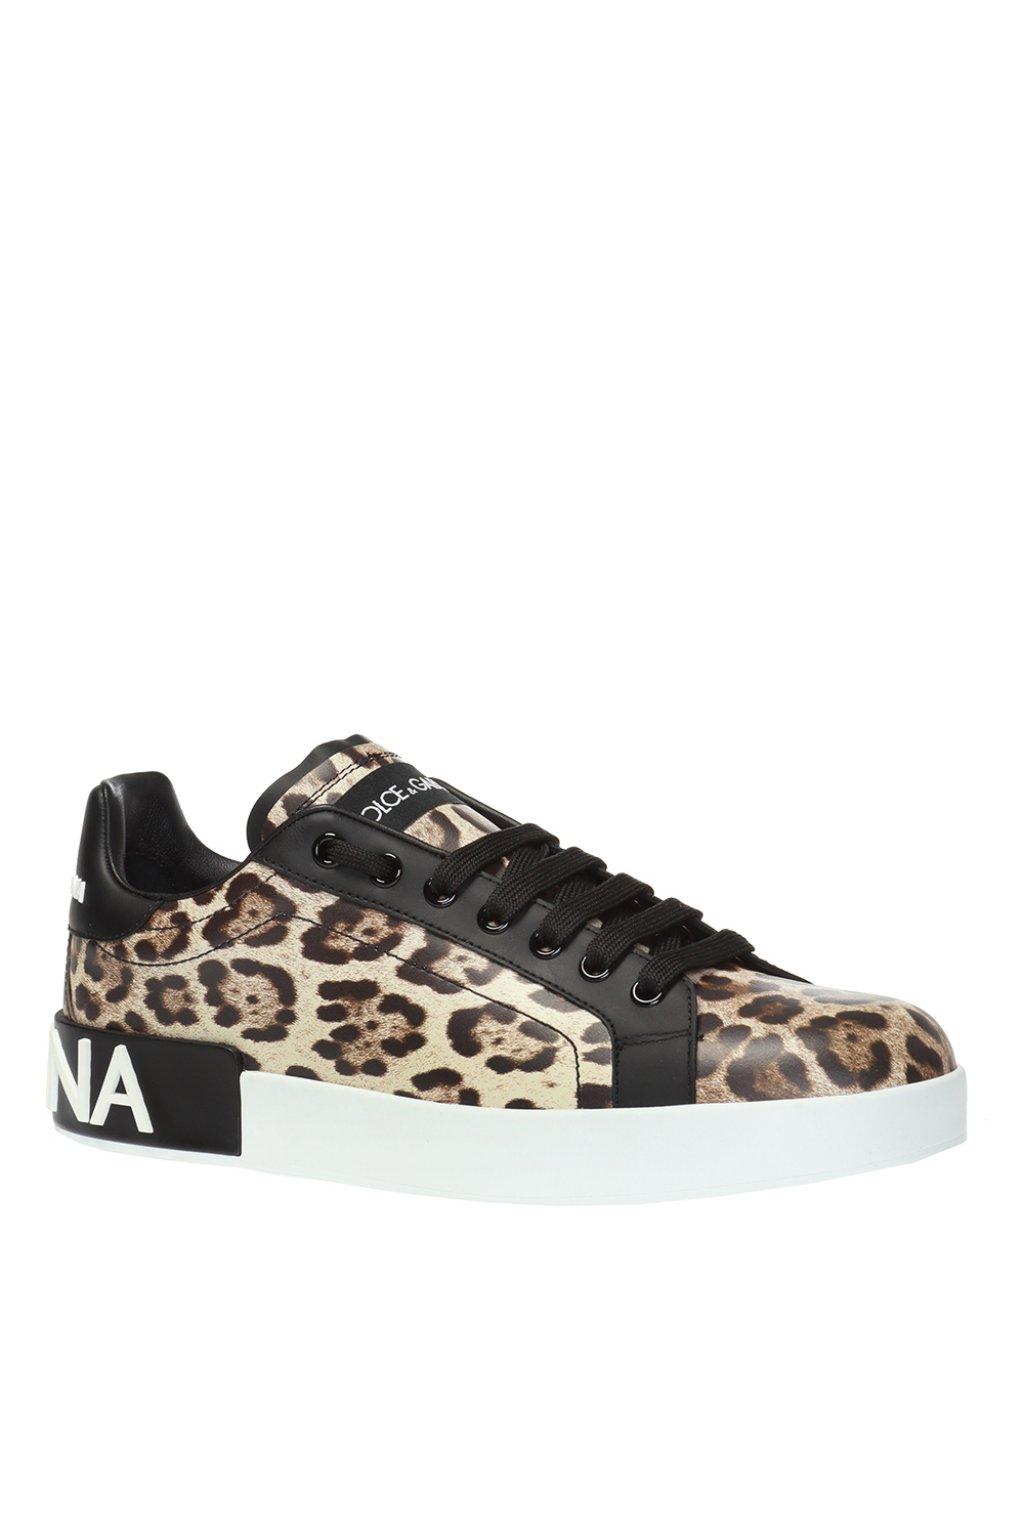 dolce & gabbana leopard print sneakers